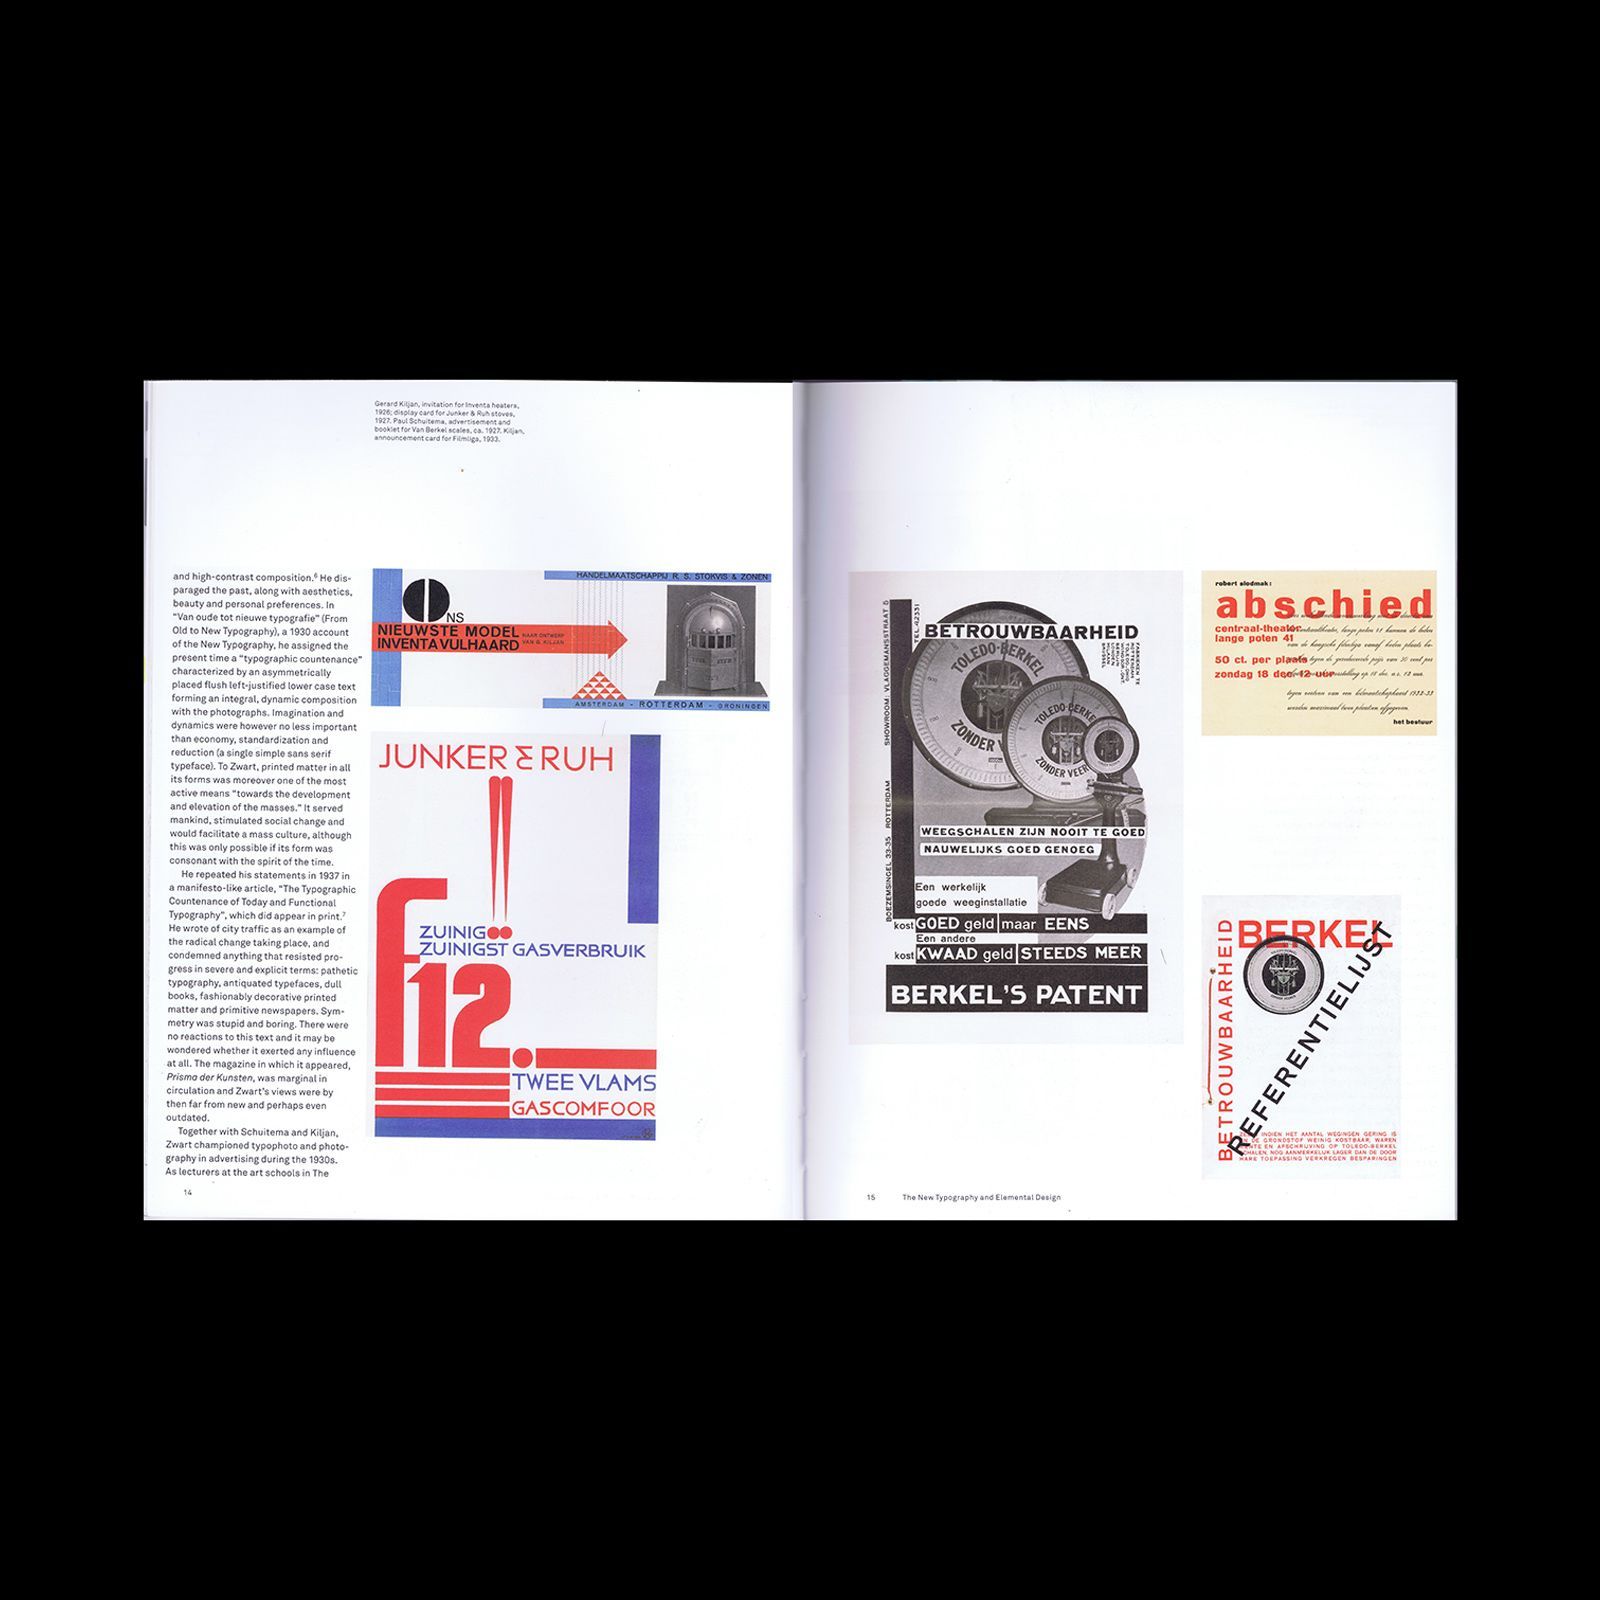 Modernism - In Print Dutch Graphic Design 1917-2017, 2017. Design by Lex Reitsma